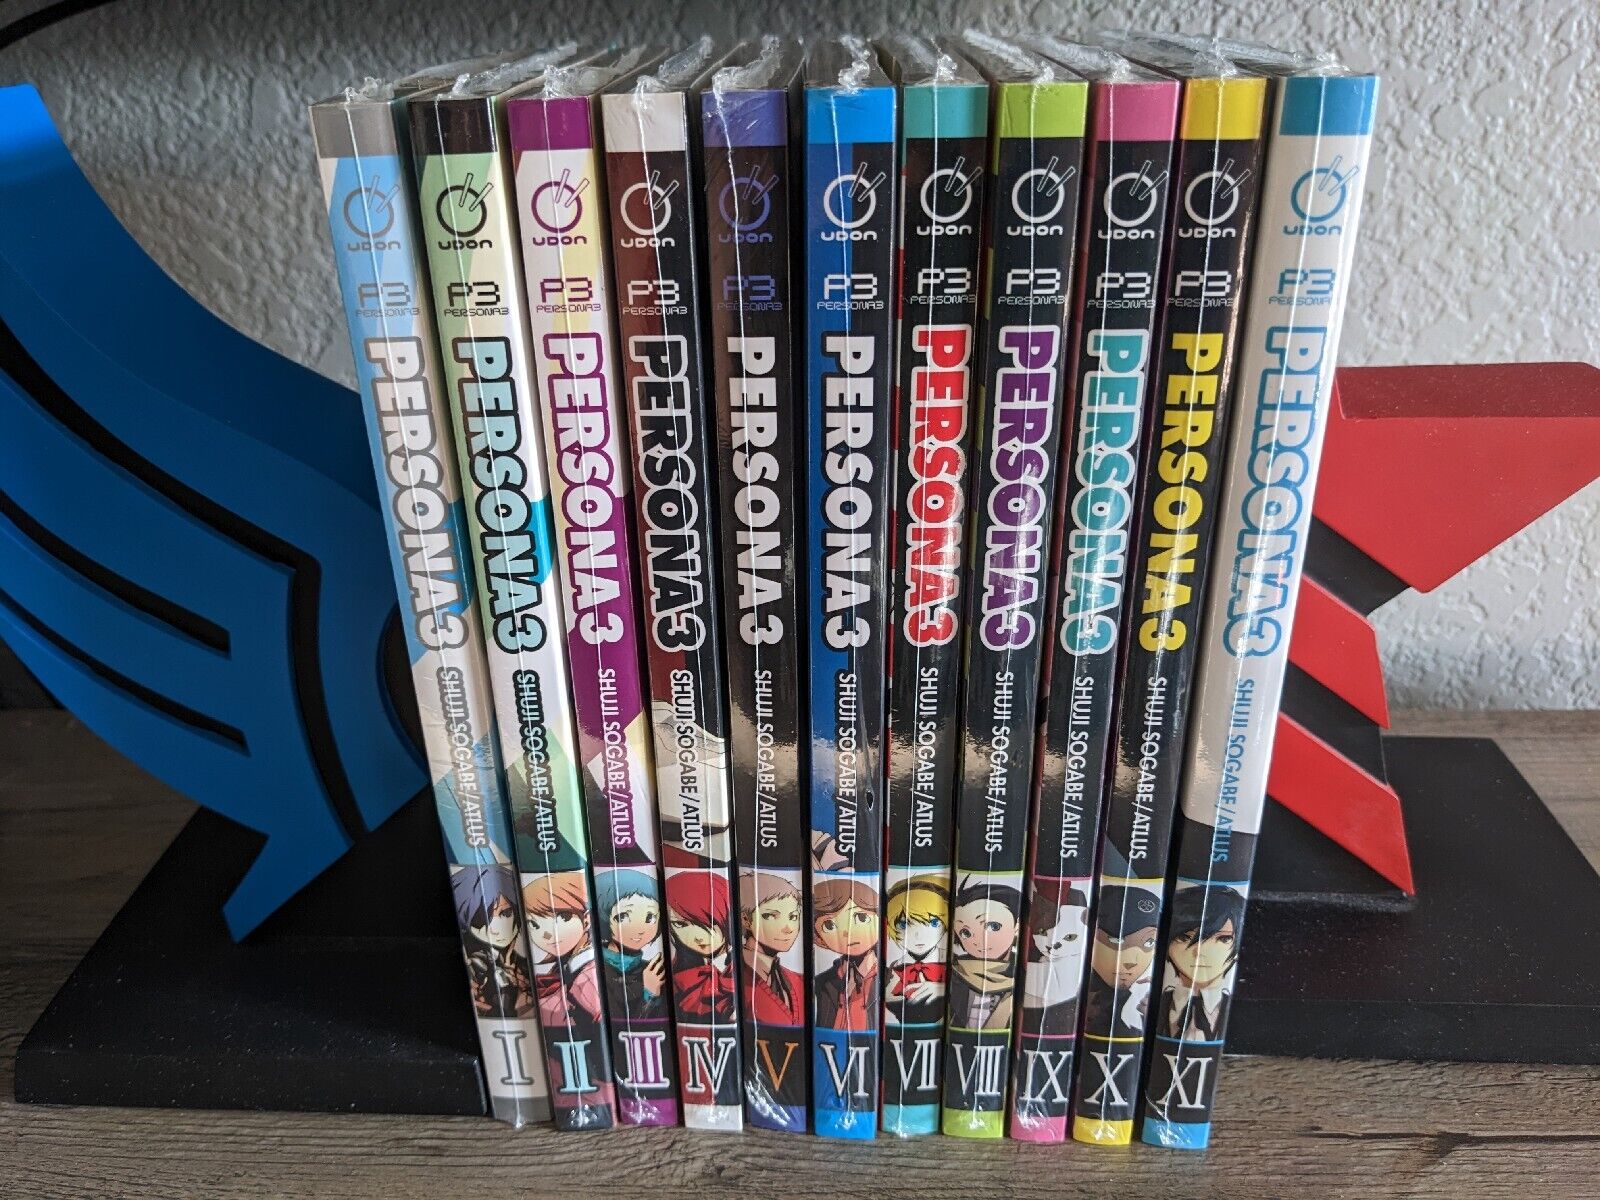 Persona 3 Vol 1-11 Complete English Manga Set - Brand New Shujii Sogabe Atlus